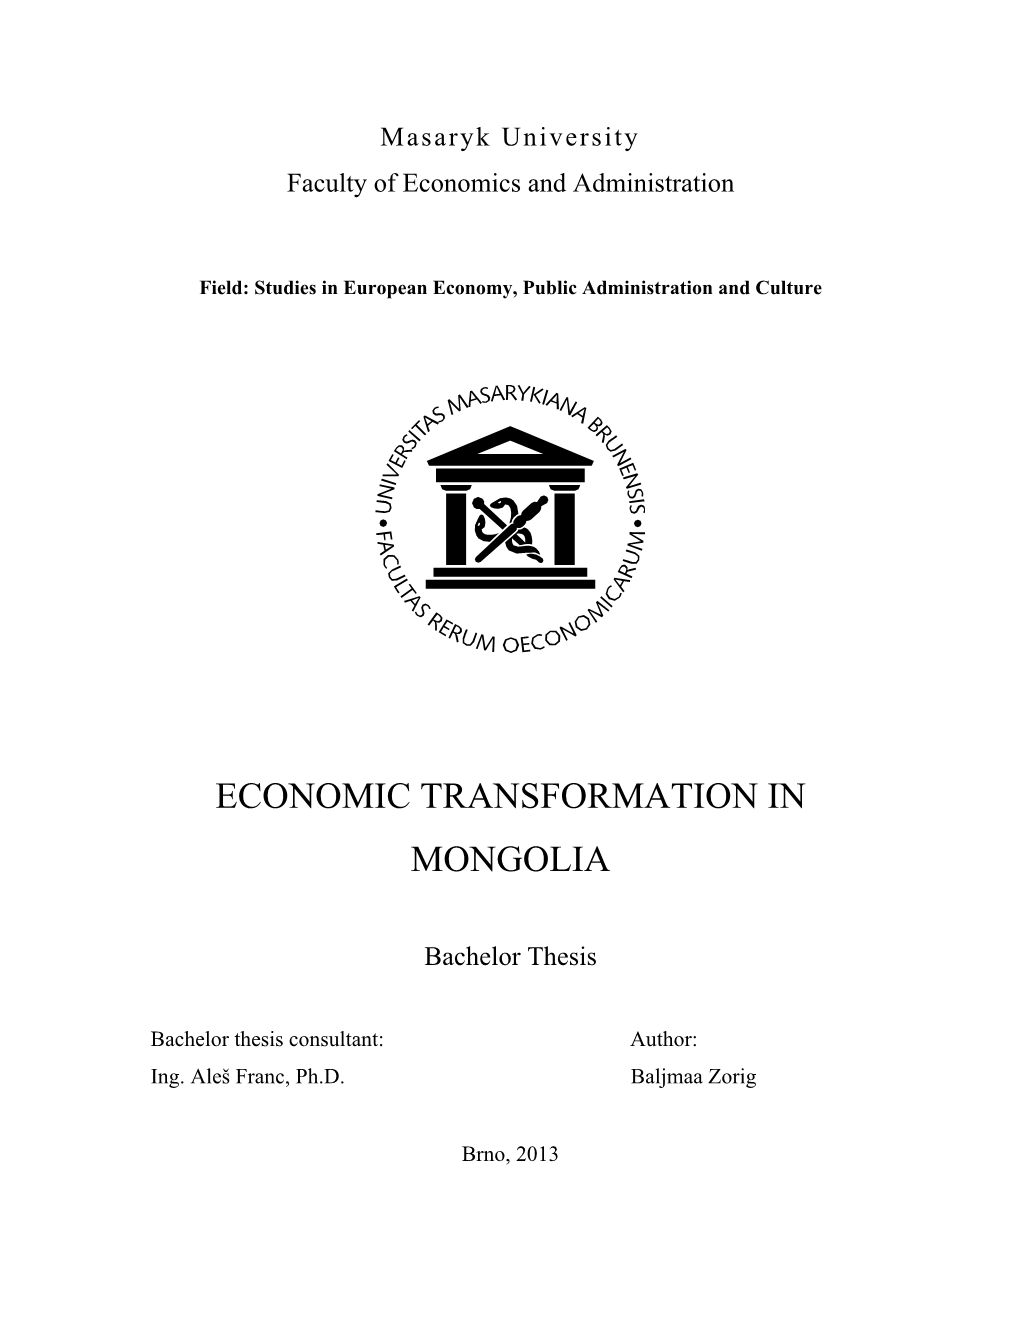 Economic Transformation in Mongolia